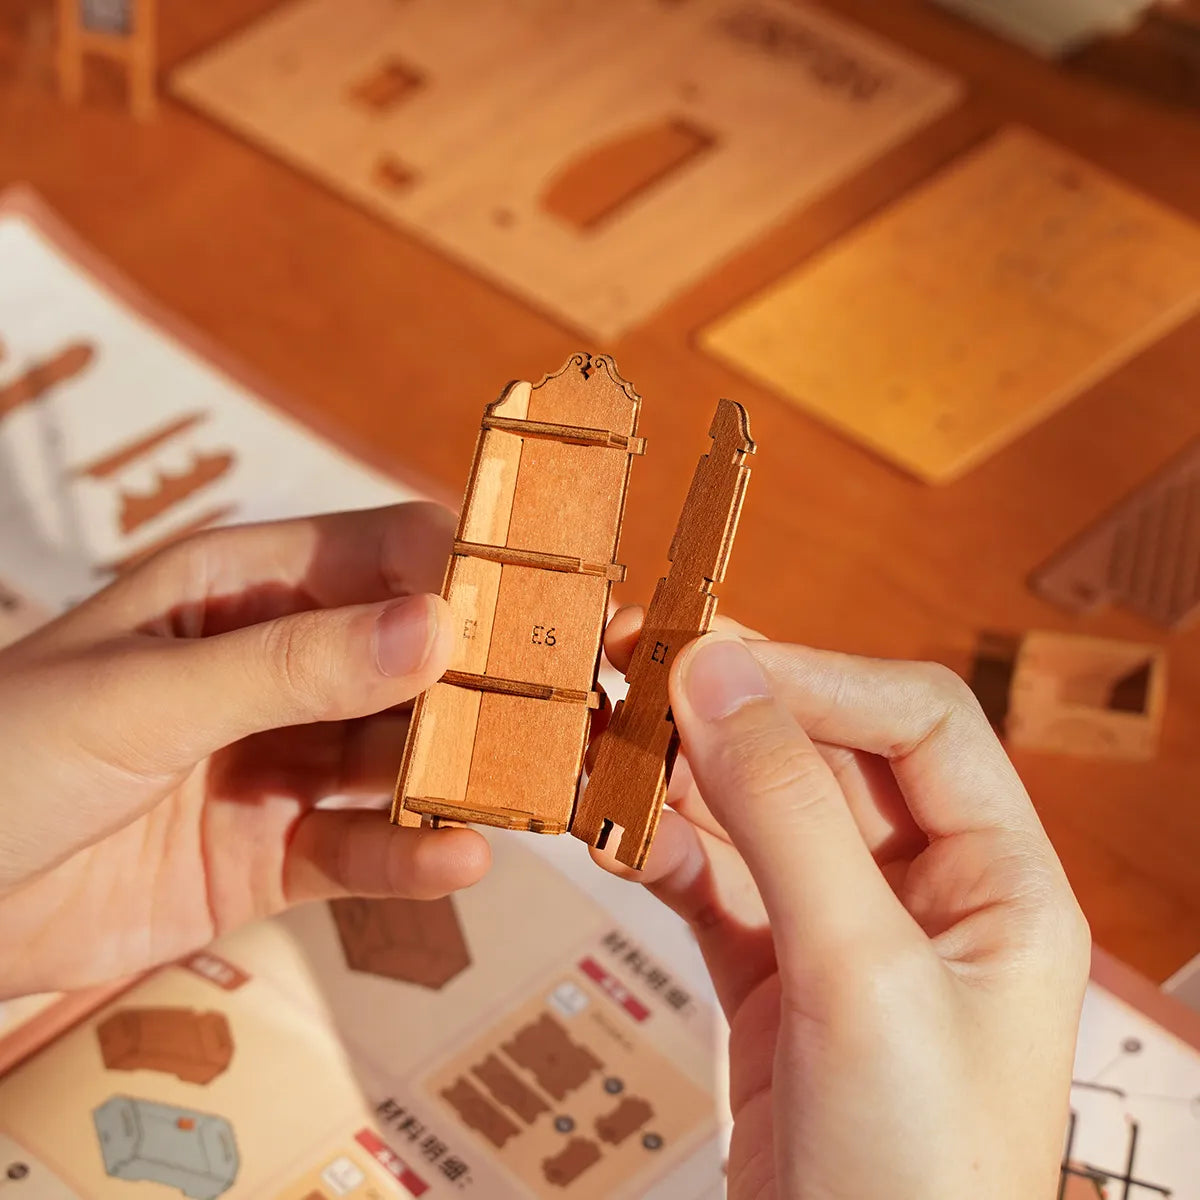 Rolife Corner Bookstore DIY Miniature House Kit DG164